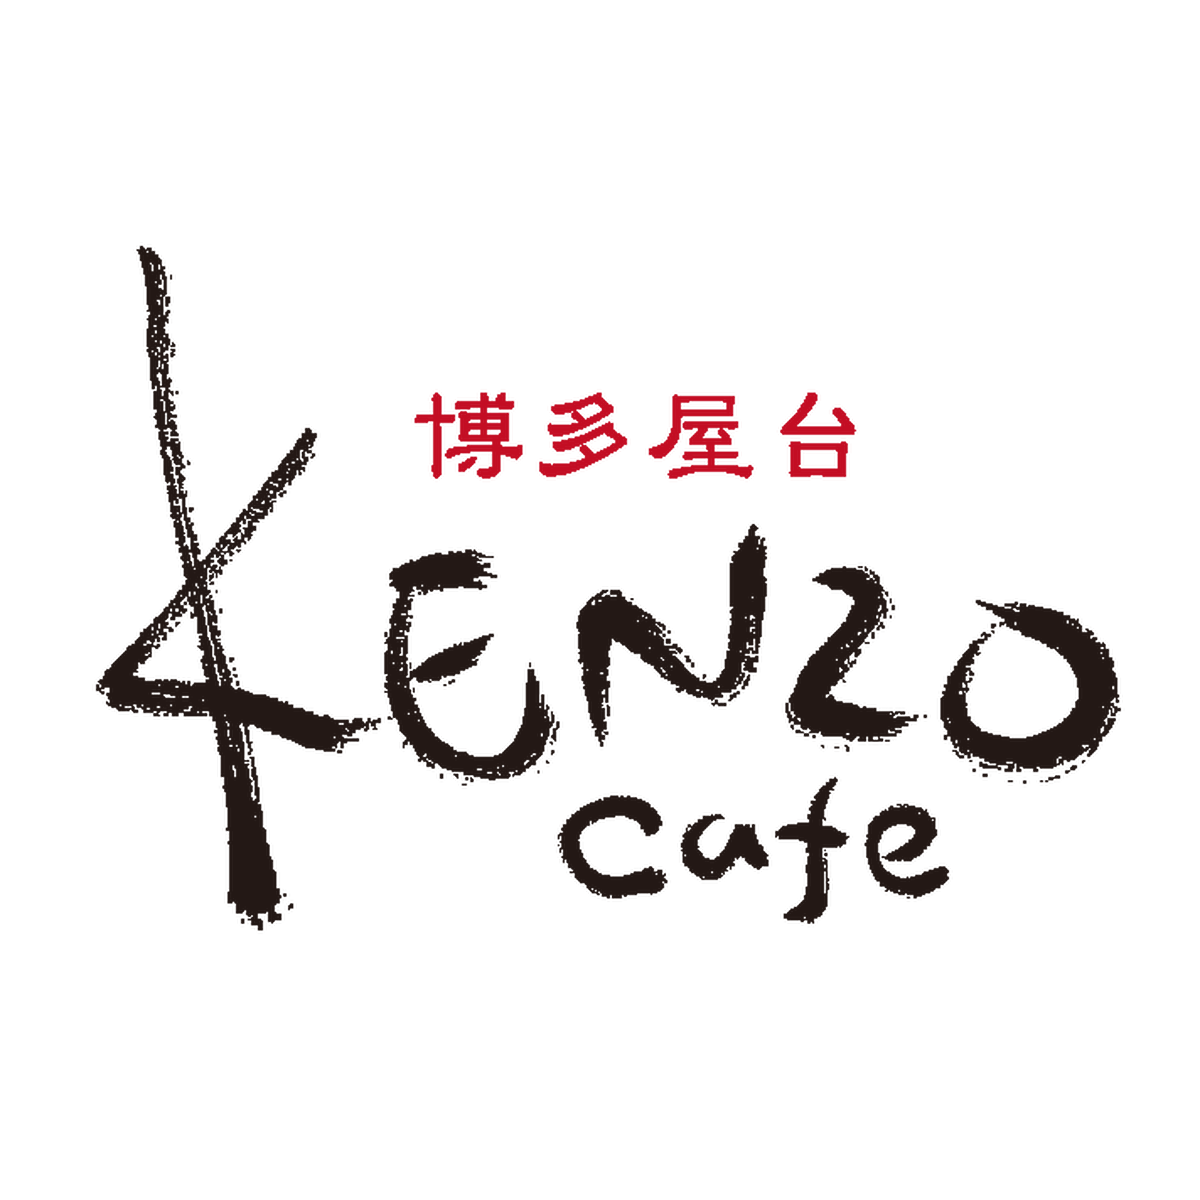 Kenzo Cafe ケンゾーカフェ 博多名物焼きラーメンと中洲の屋台料理